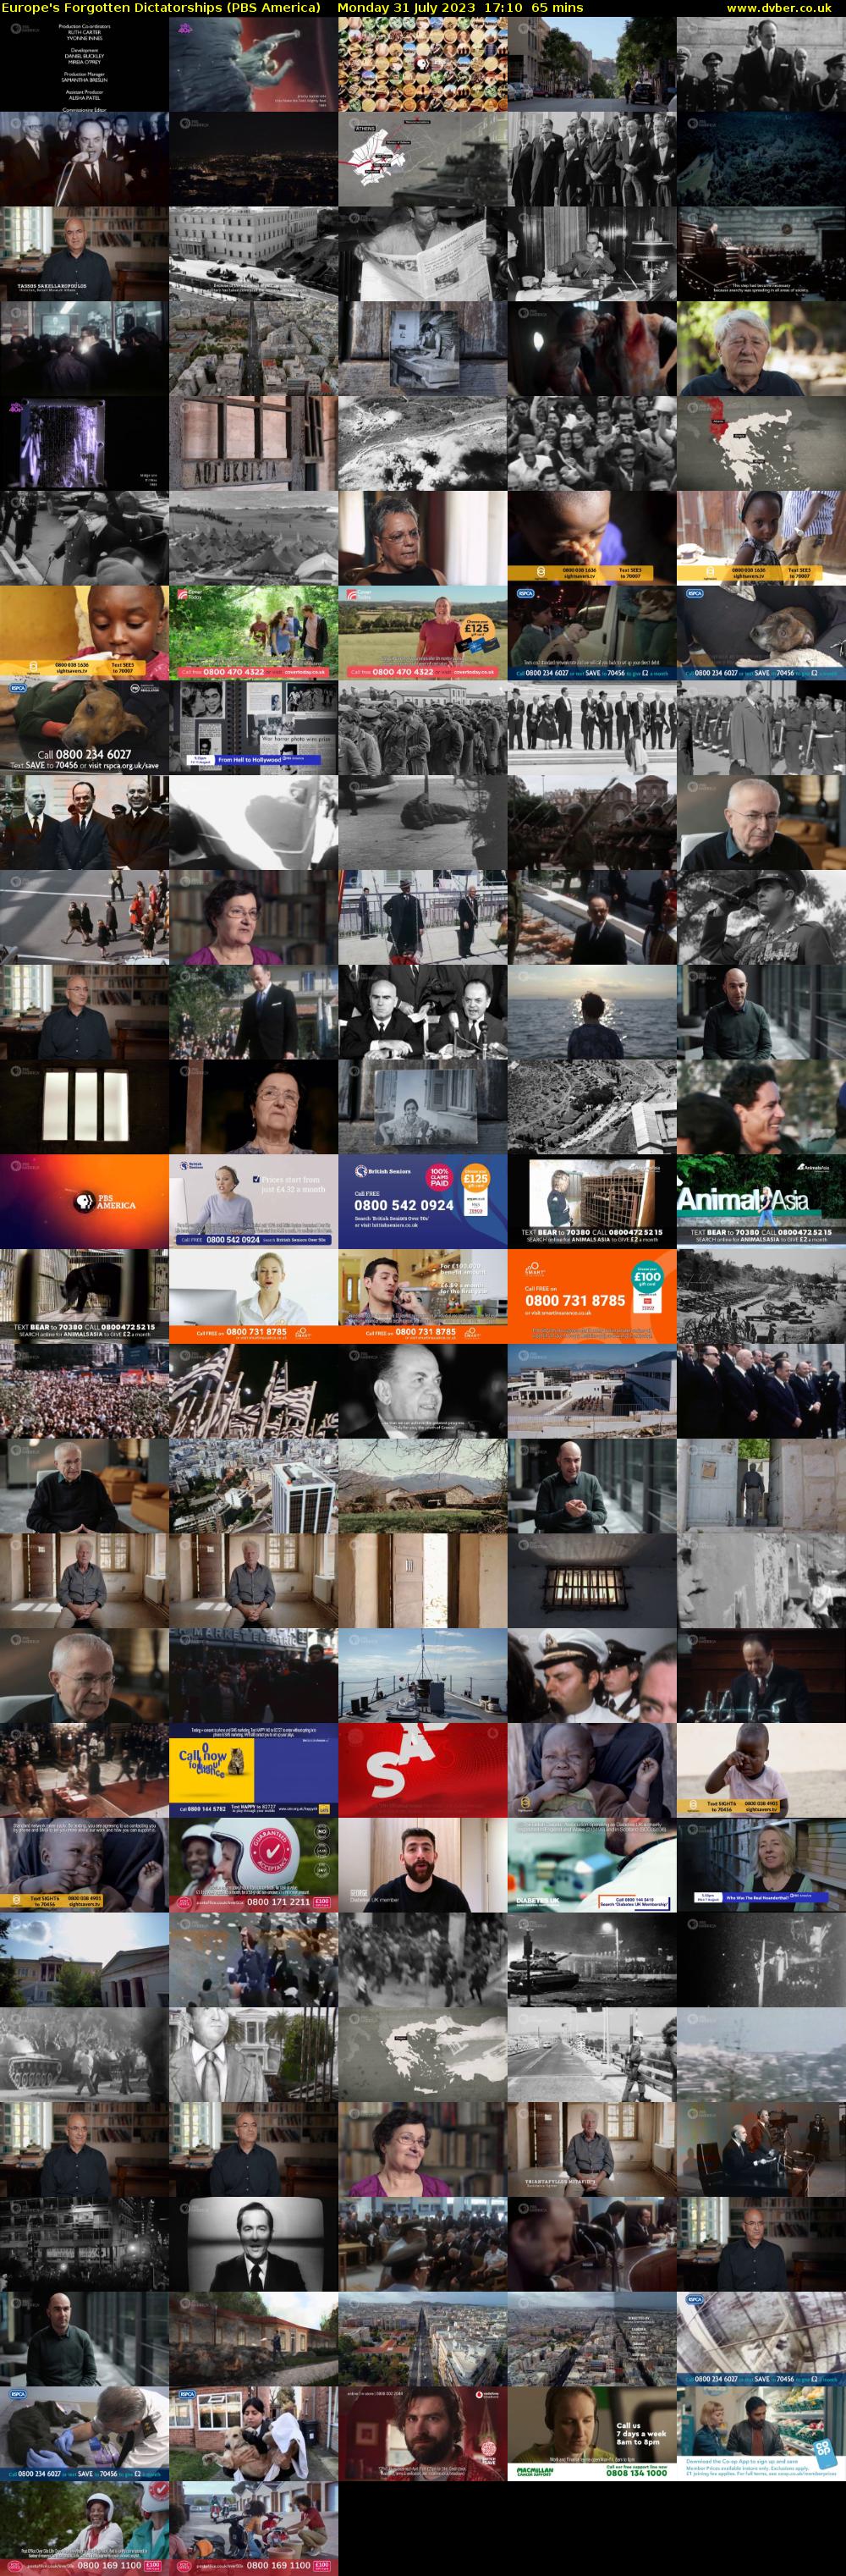 Europe's Forgotten Dictatorships (PBS America) Monday 31 July 2023 17:10 - 18:15